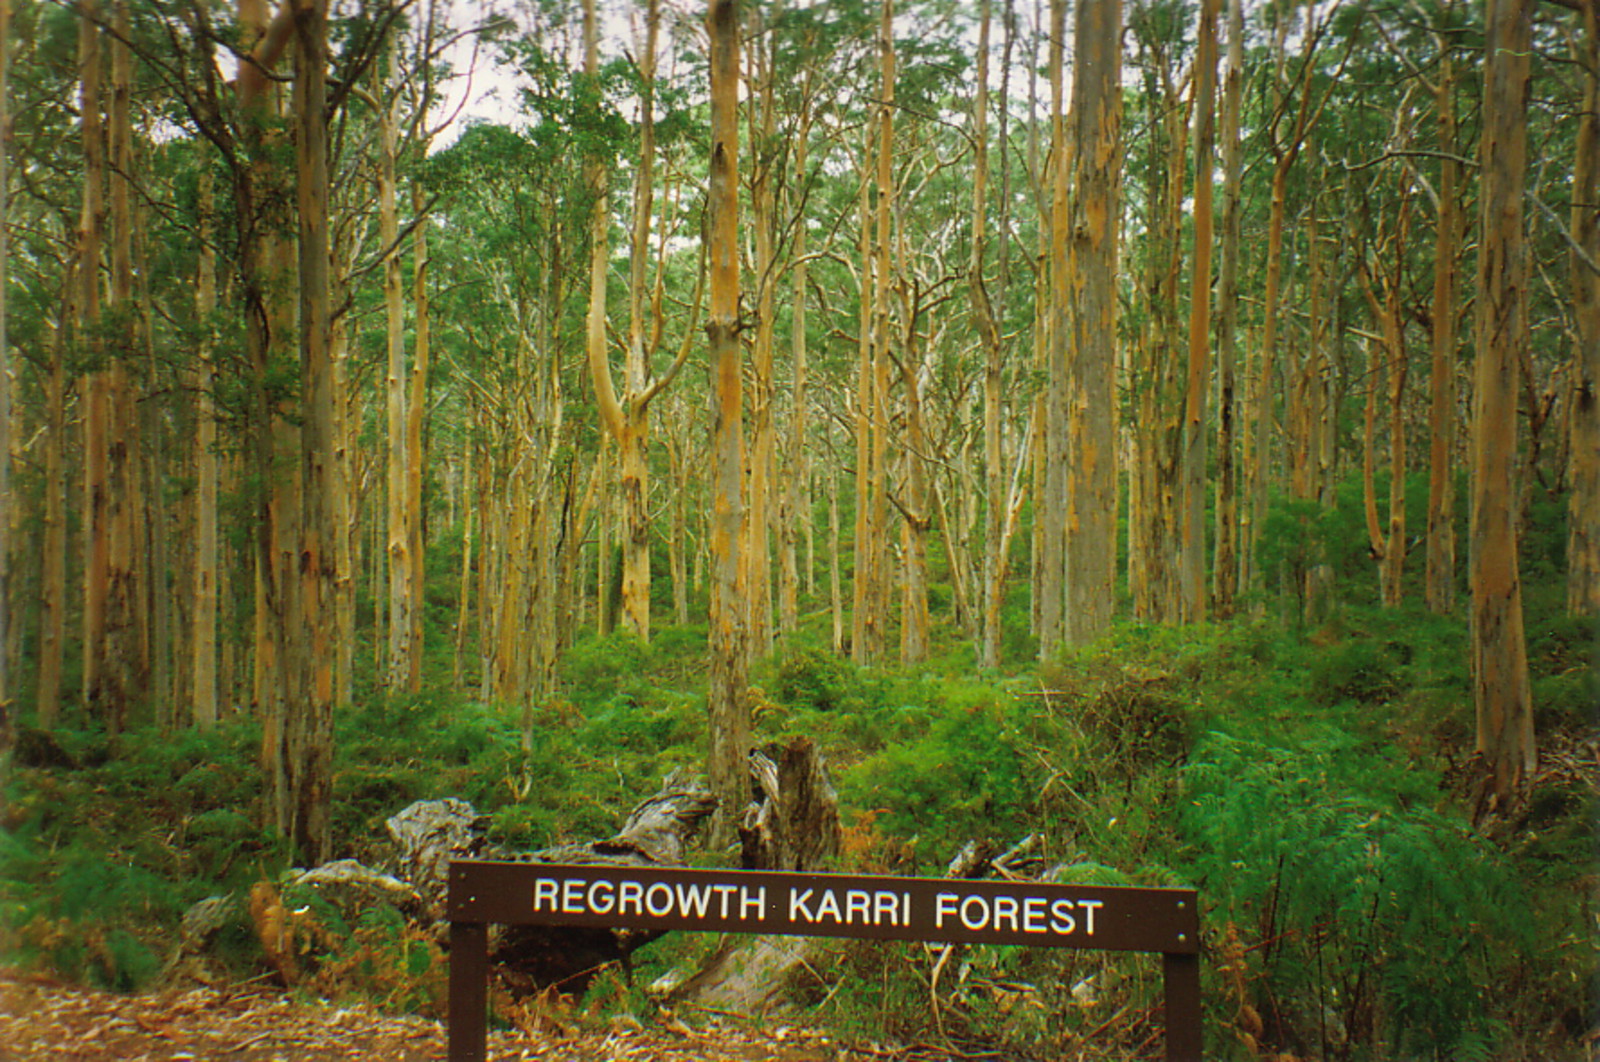 A karri forest